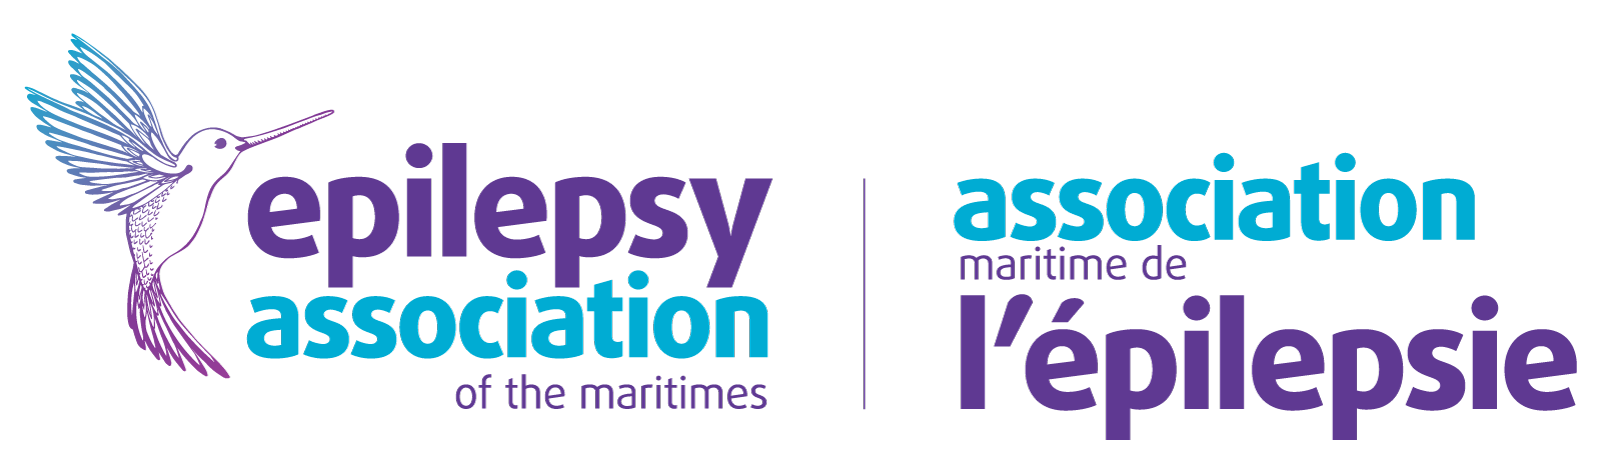 ASSOCIATION MARITIME DE L'EPILEPSIE logo